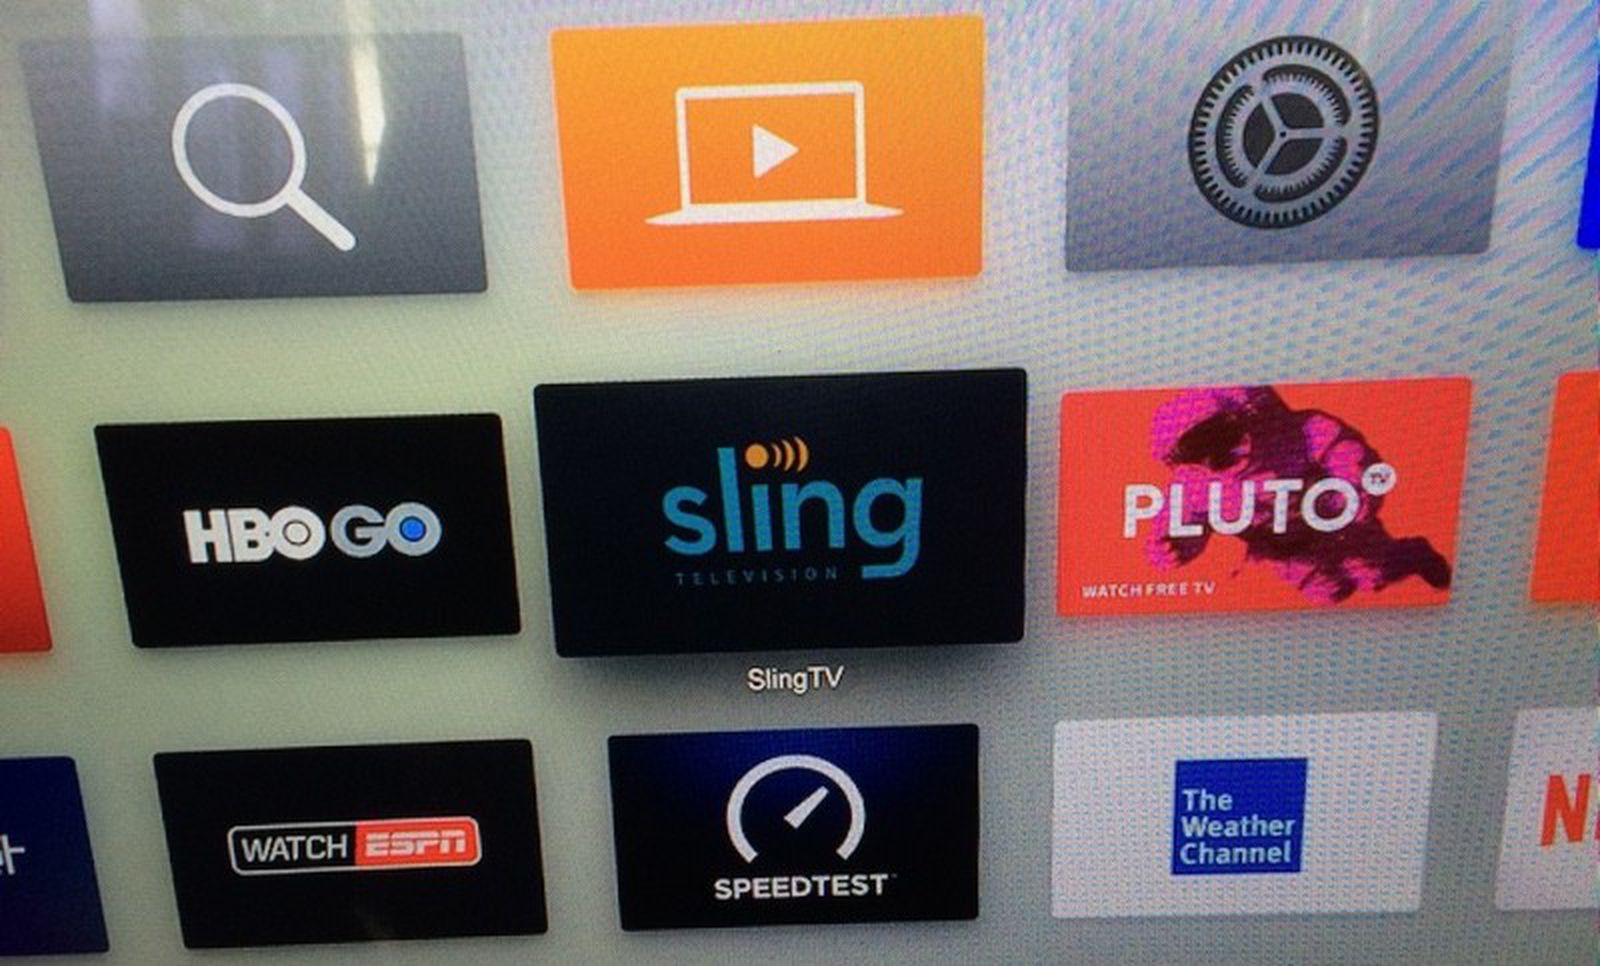 windows 10 sling tv app doesn